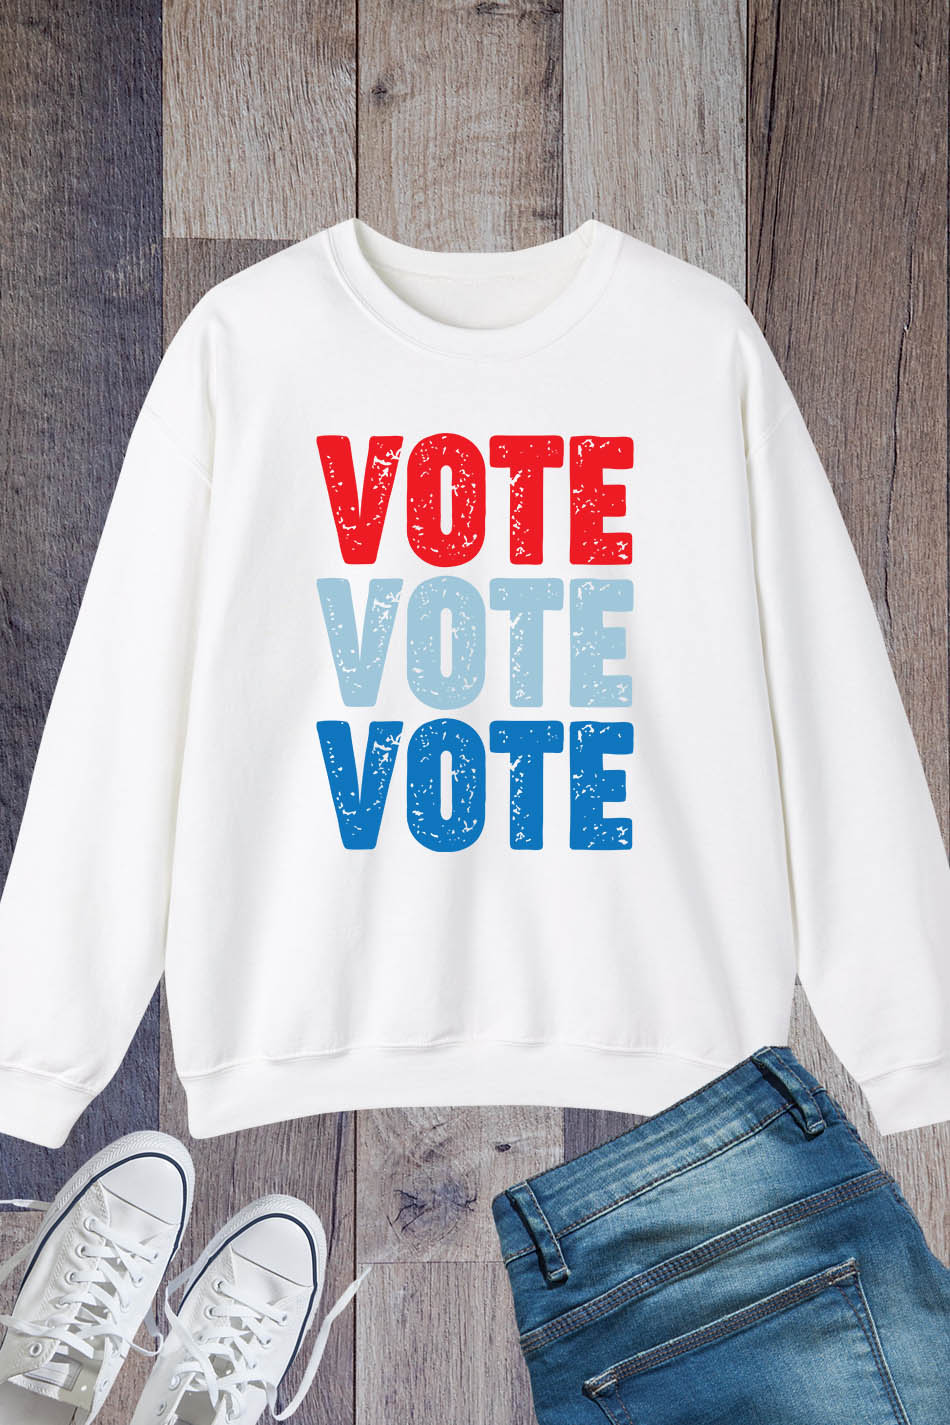 Vote for Change Election Politics Sweatshirt